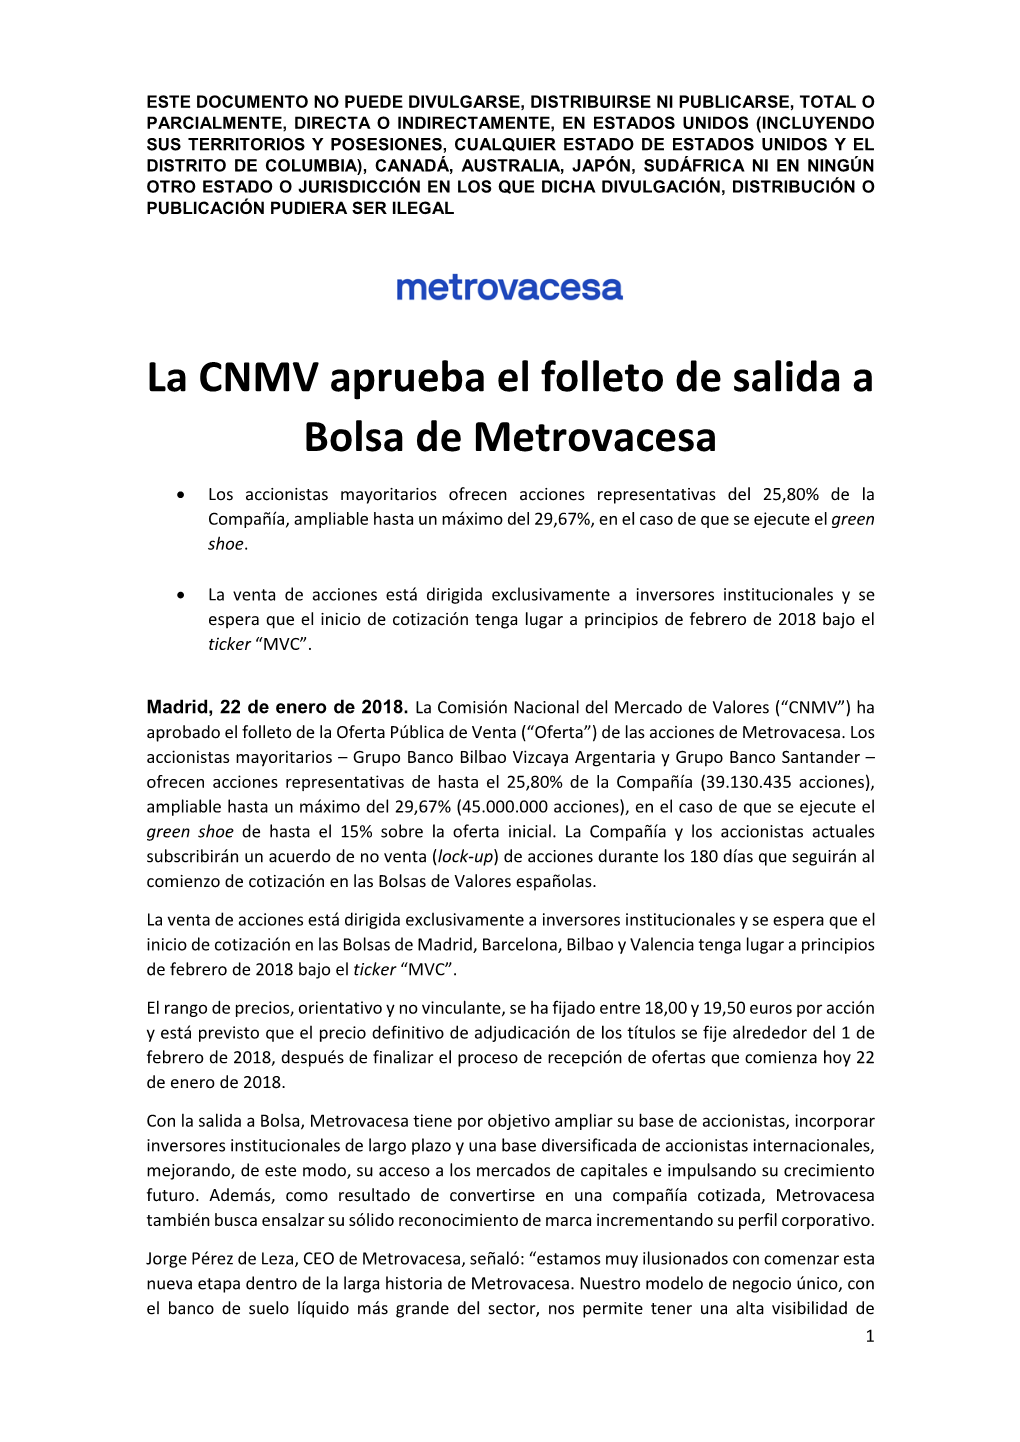 La CNMV Aprueba El Folleto De Salida a Bolsa De Metrovacesa